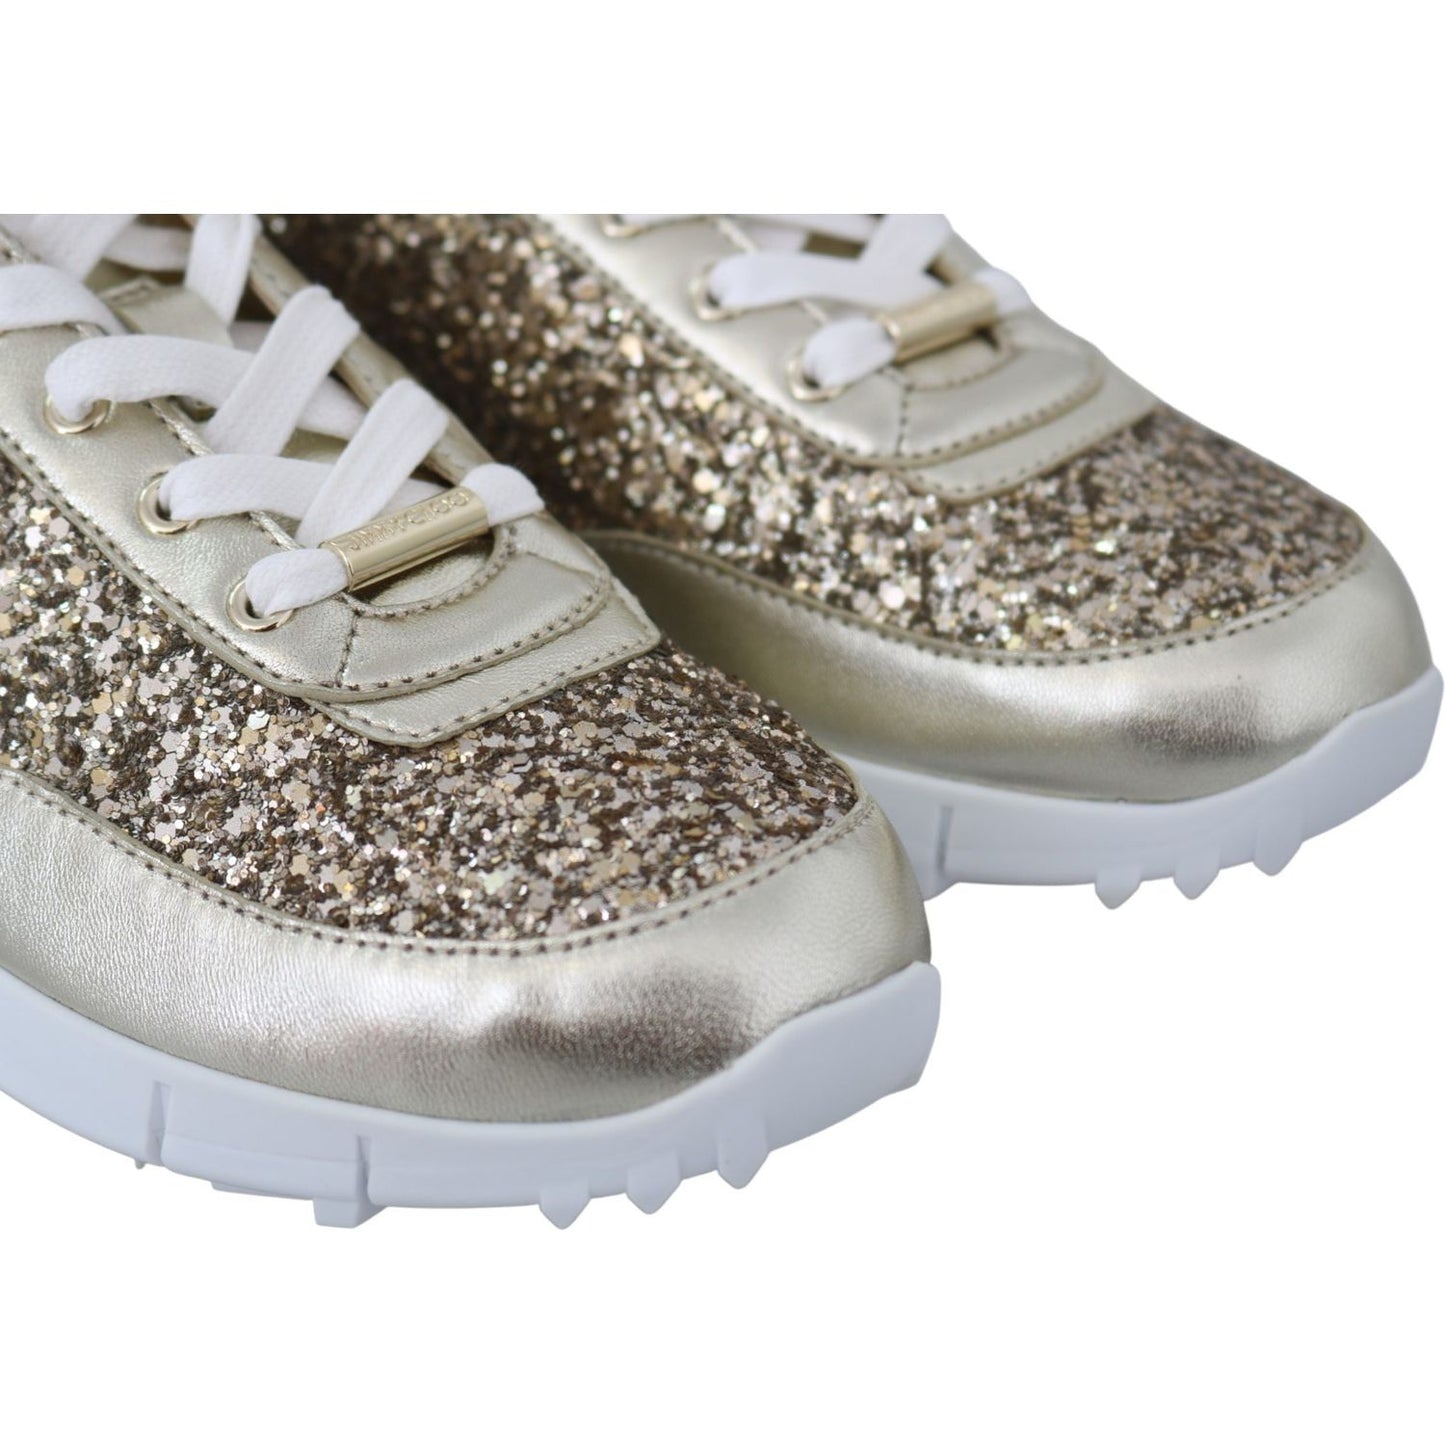 Jimmy ChooAntique Gold Glitter Leather SneakersMcRichard Designer Brands£439.00